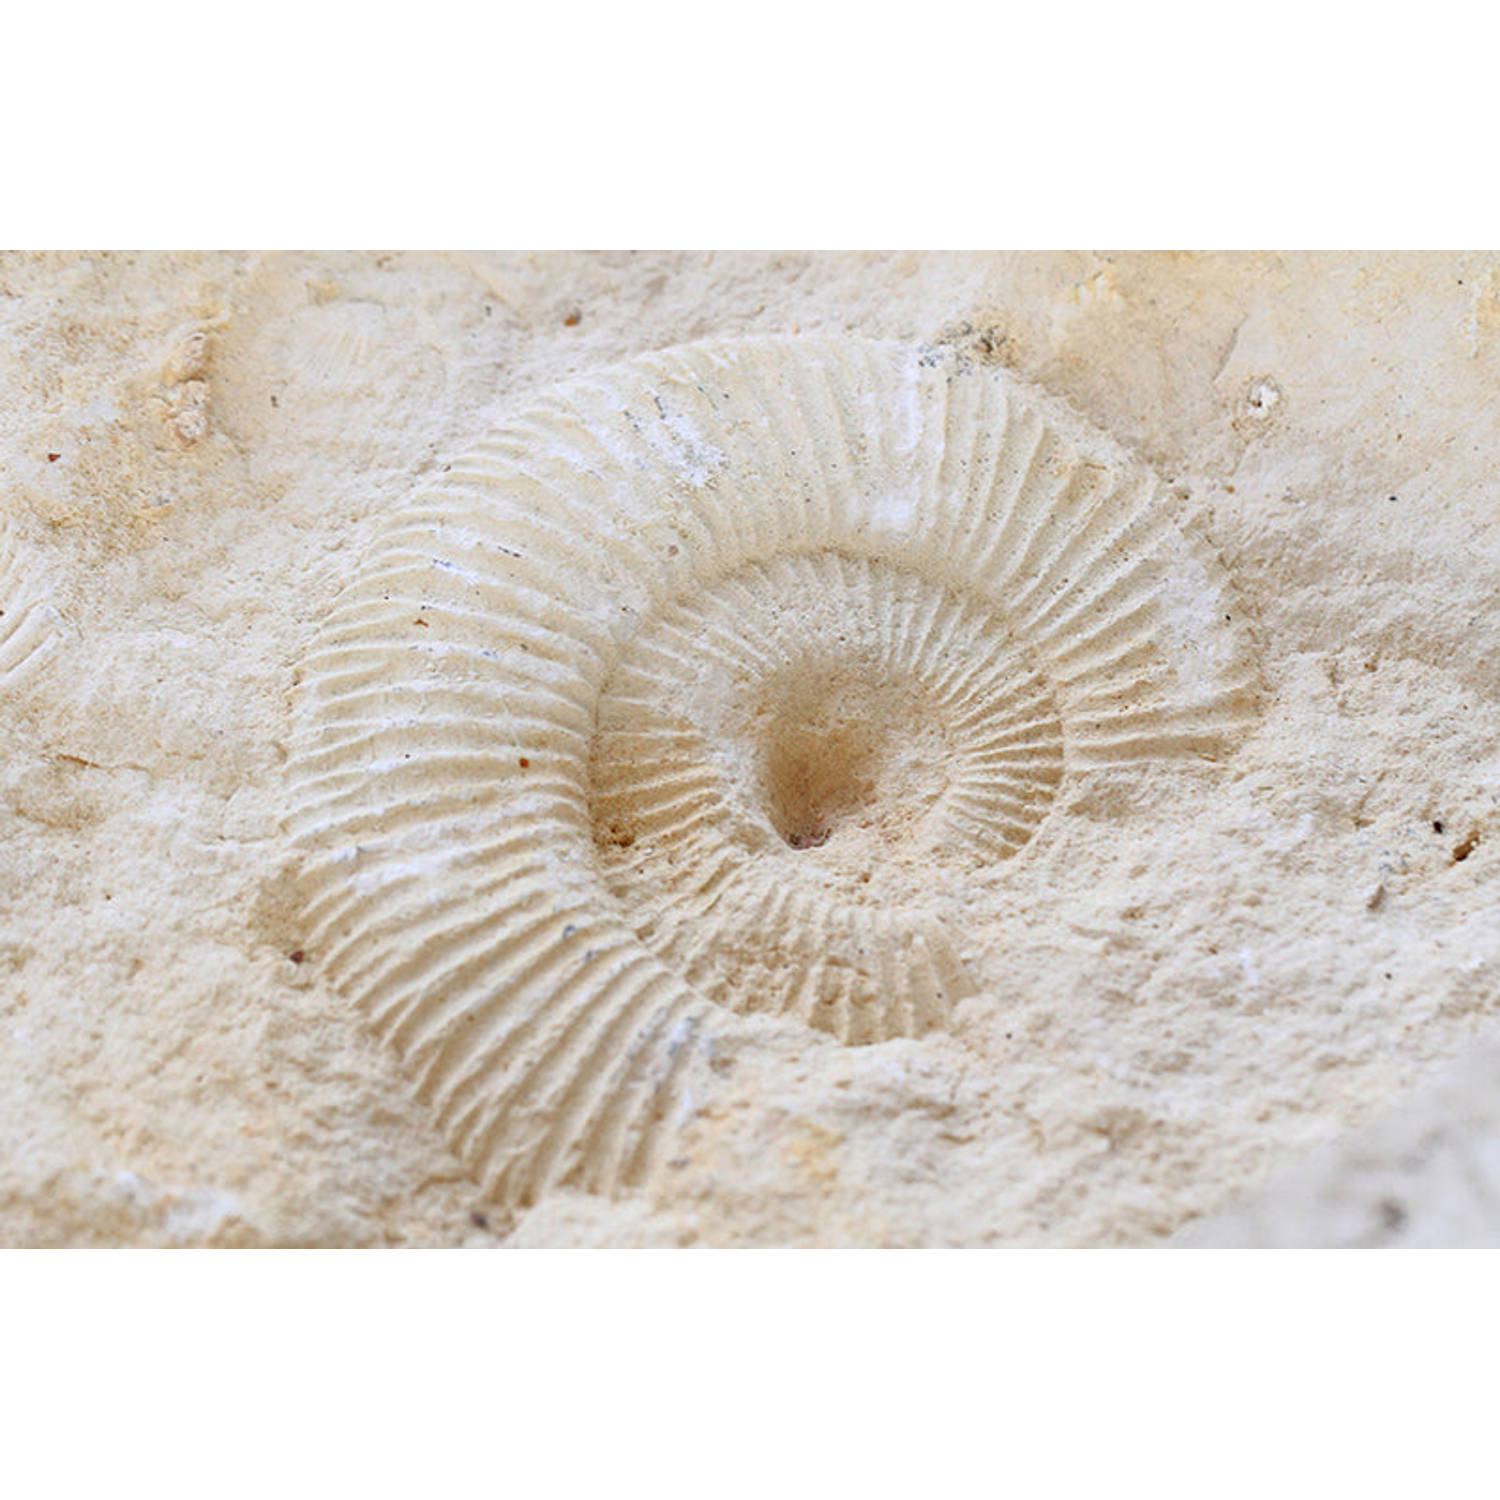 Inductiebeschermer - Ammonites Fossil - 80x50 cm - Inductiebeschermer - Inductie Afdekplaat Kookplaat - Inductie Mat - Anti-Slip - Keuken Decoratie - Keuken Accessoires